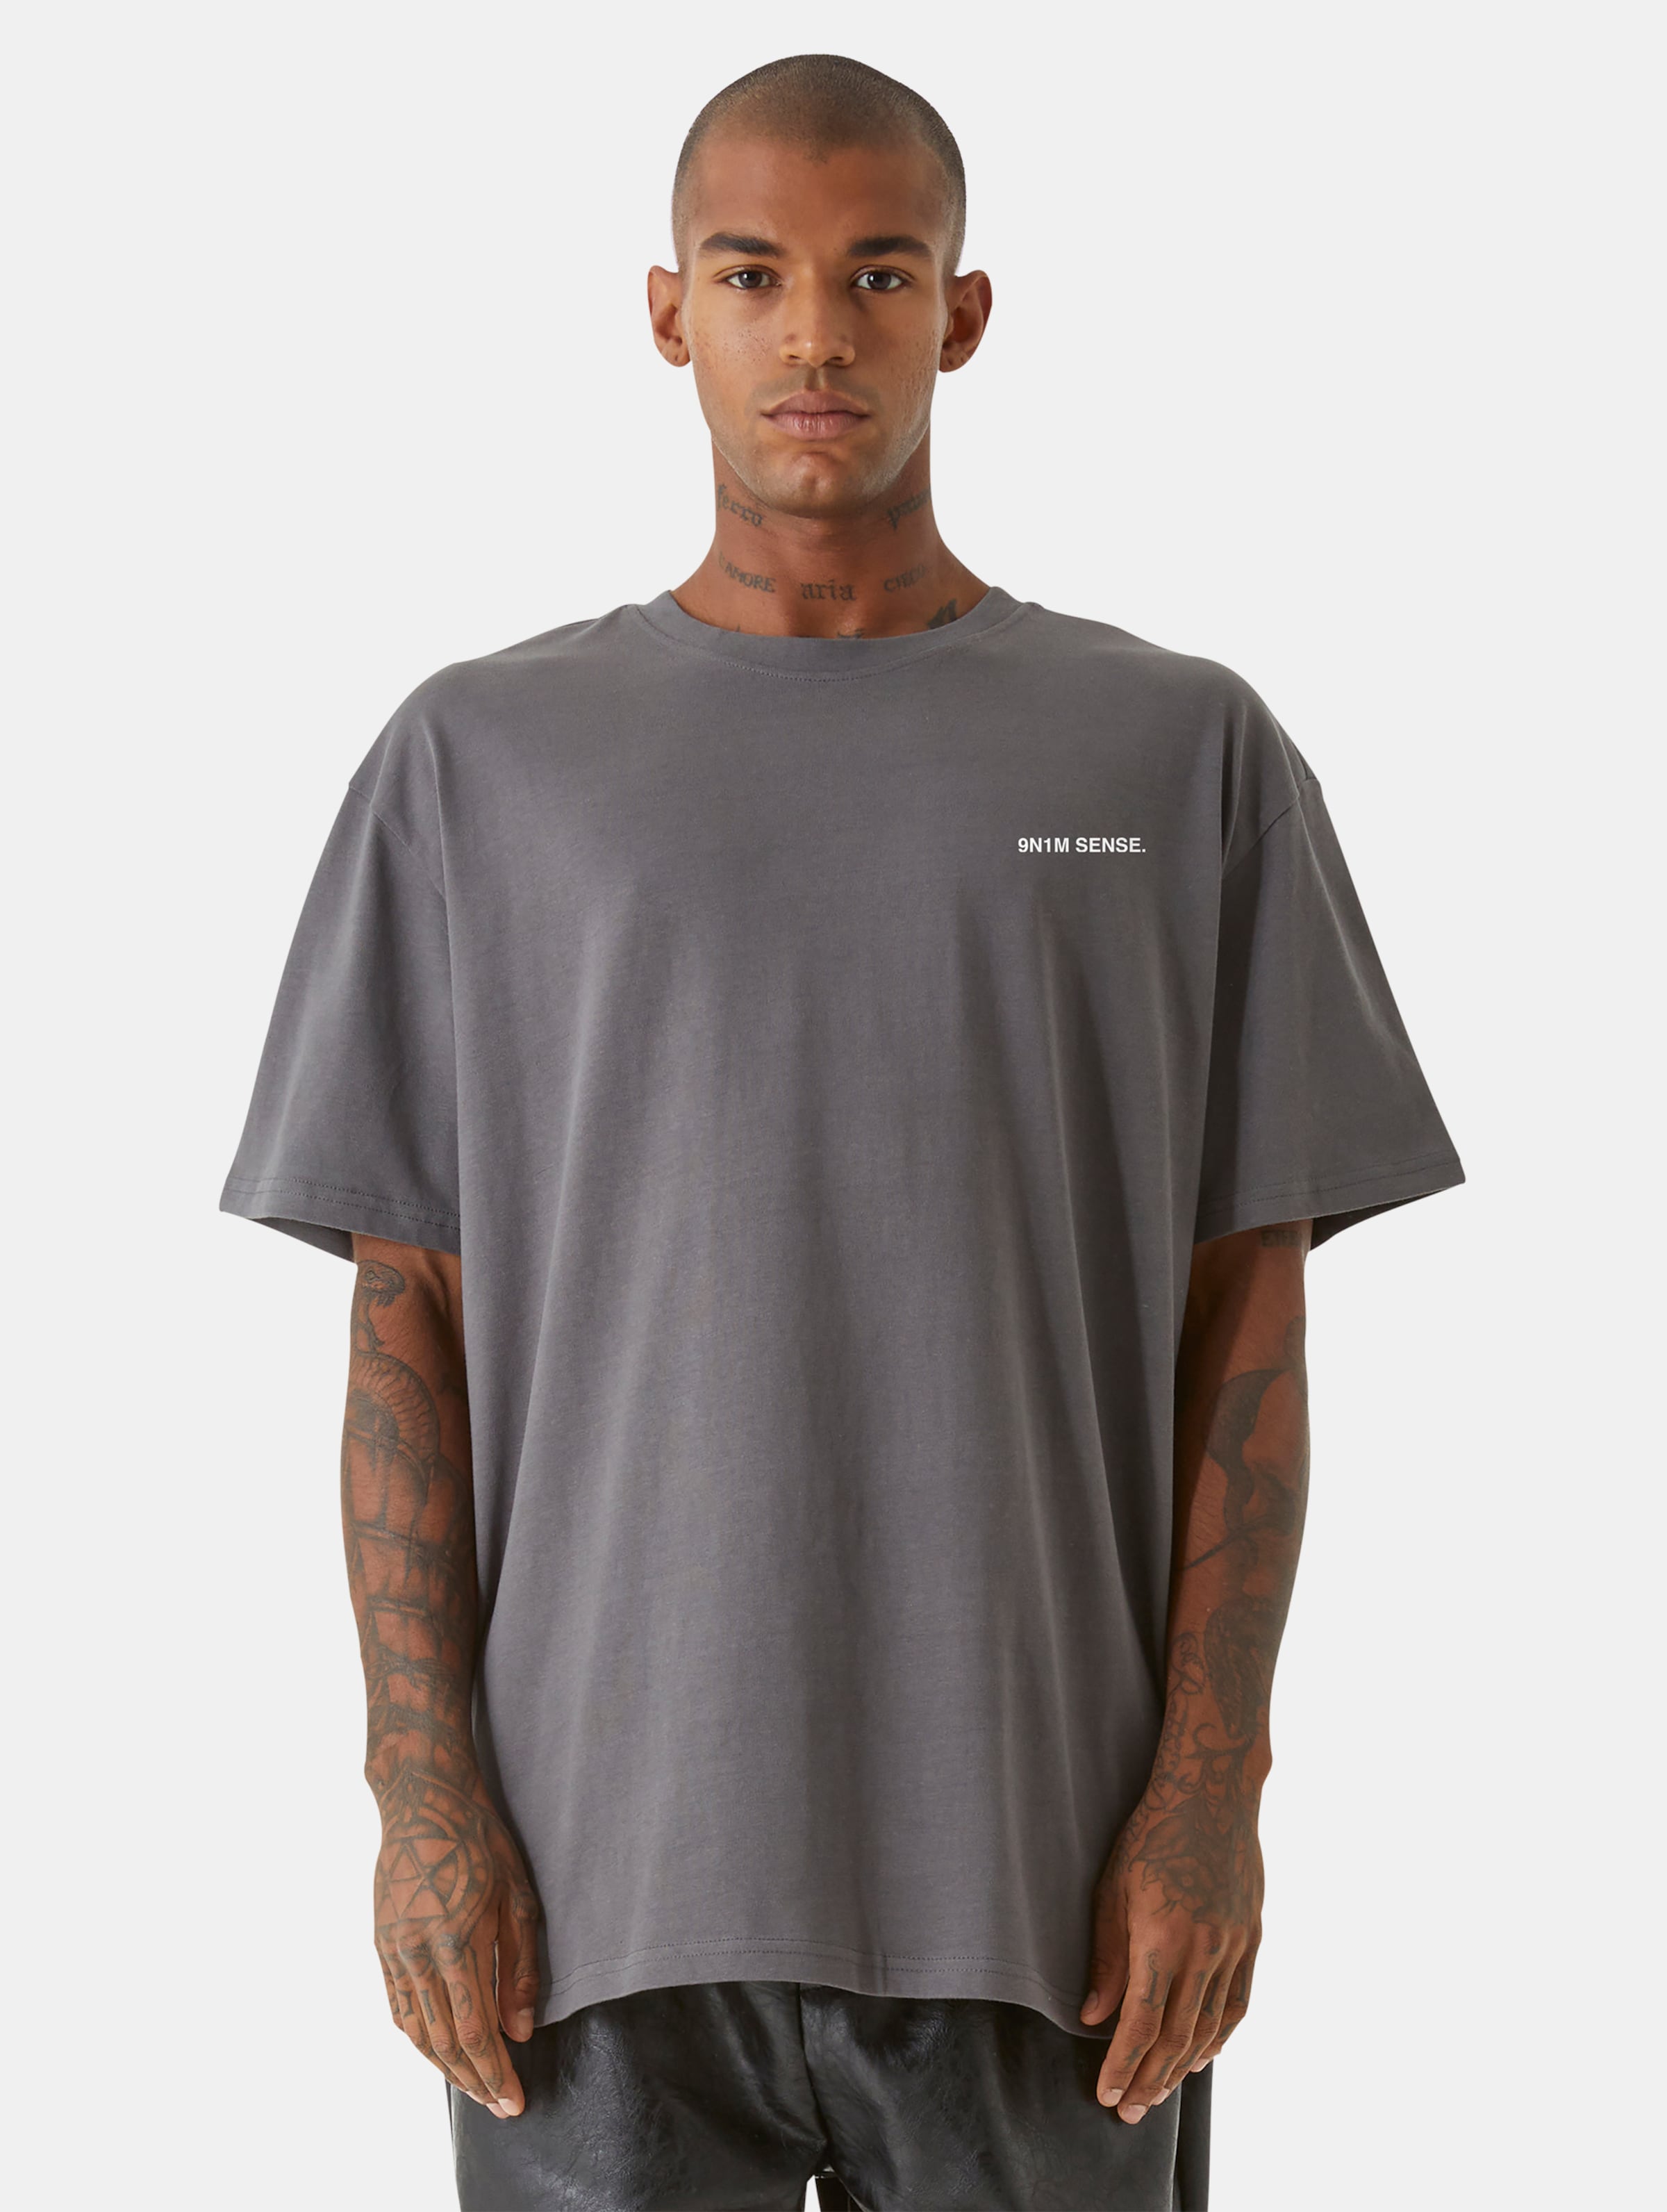 9N1M SENSE Change T-Shirts Männer,Unisex op kleur grijs, Maat S